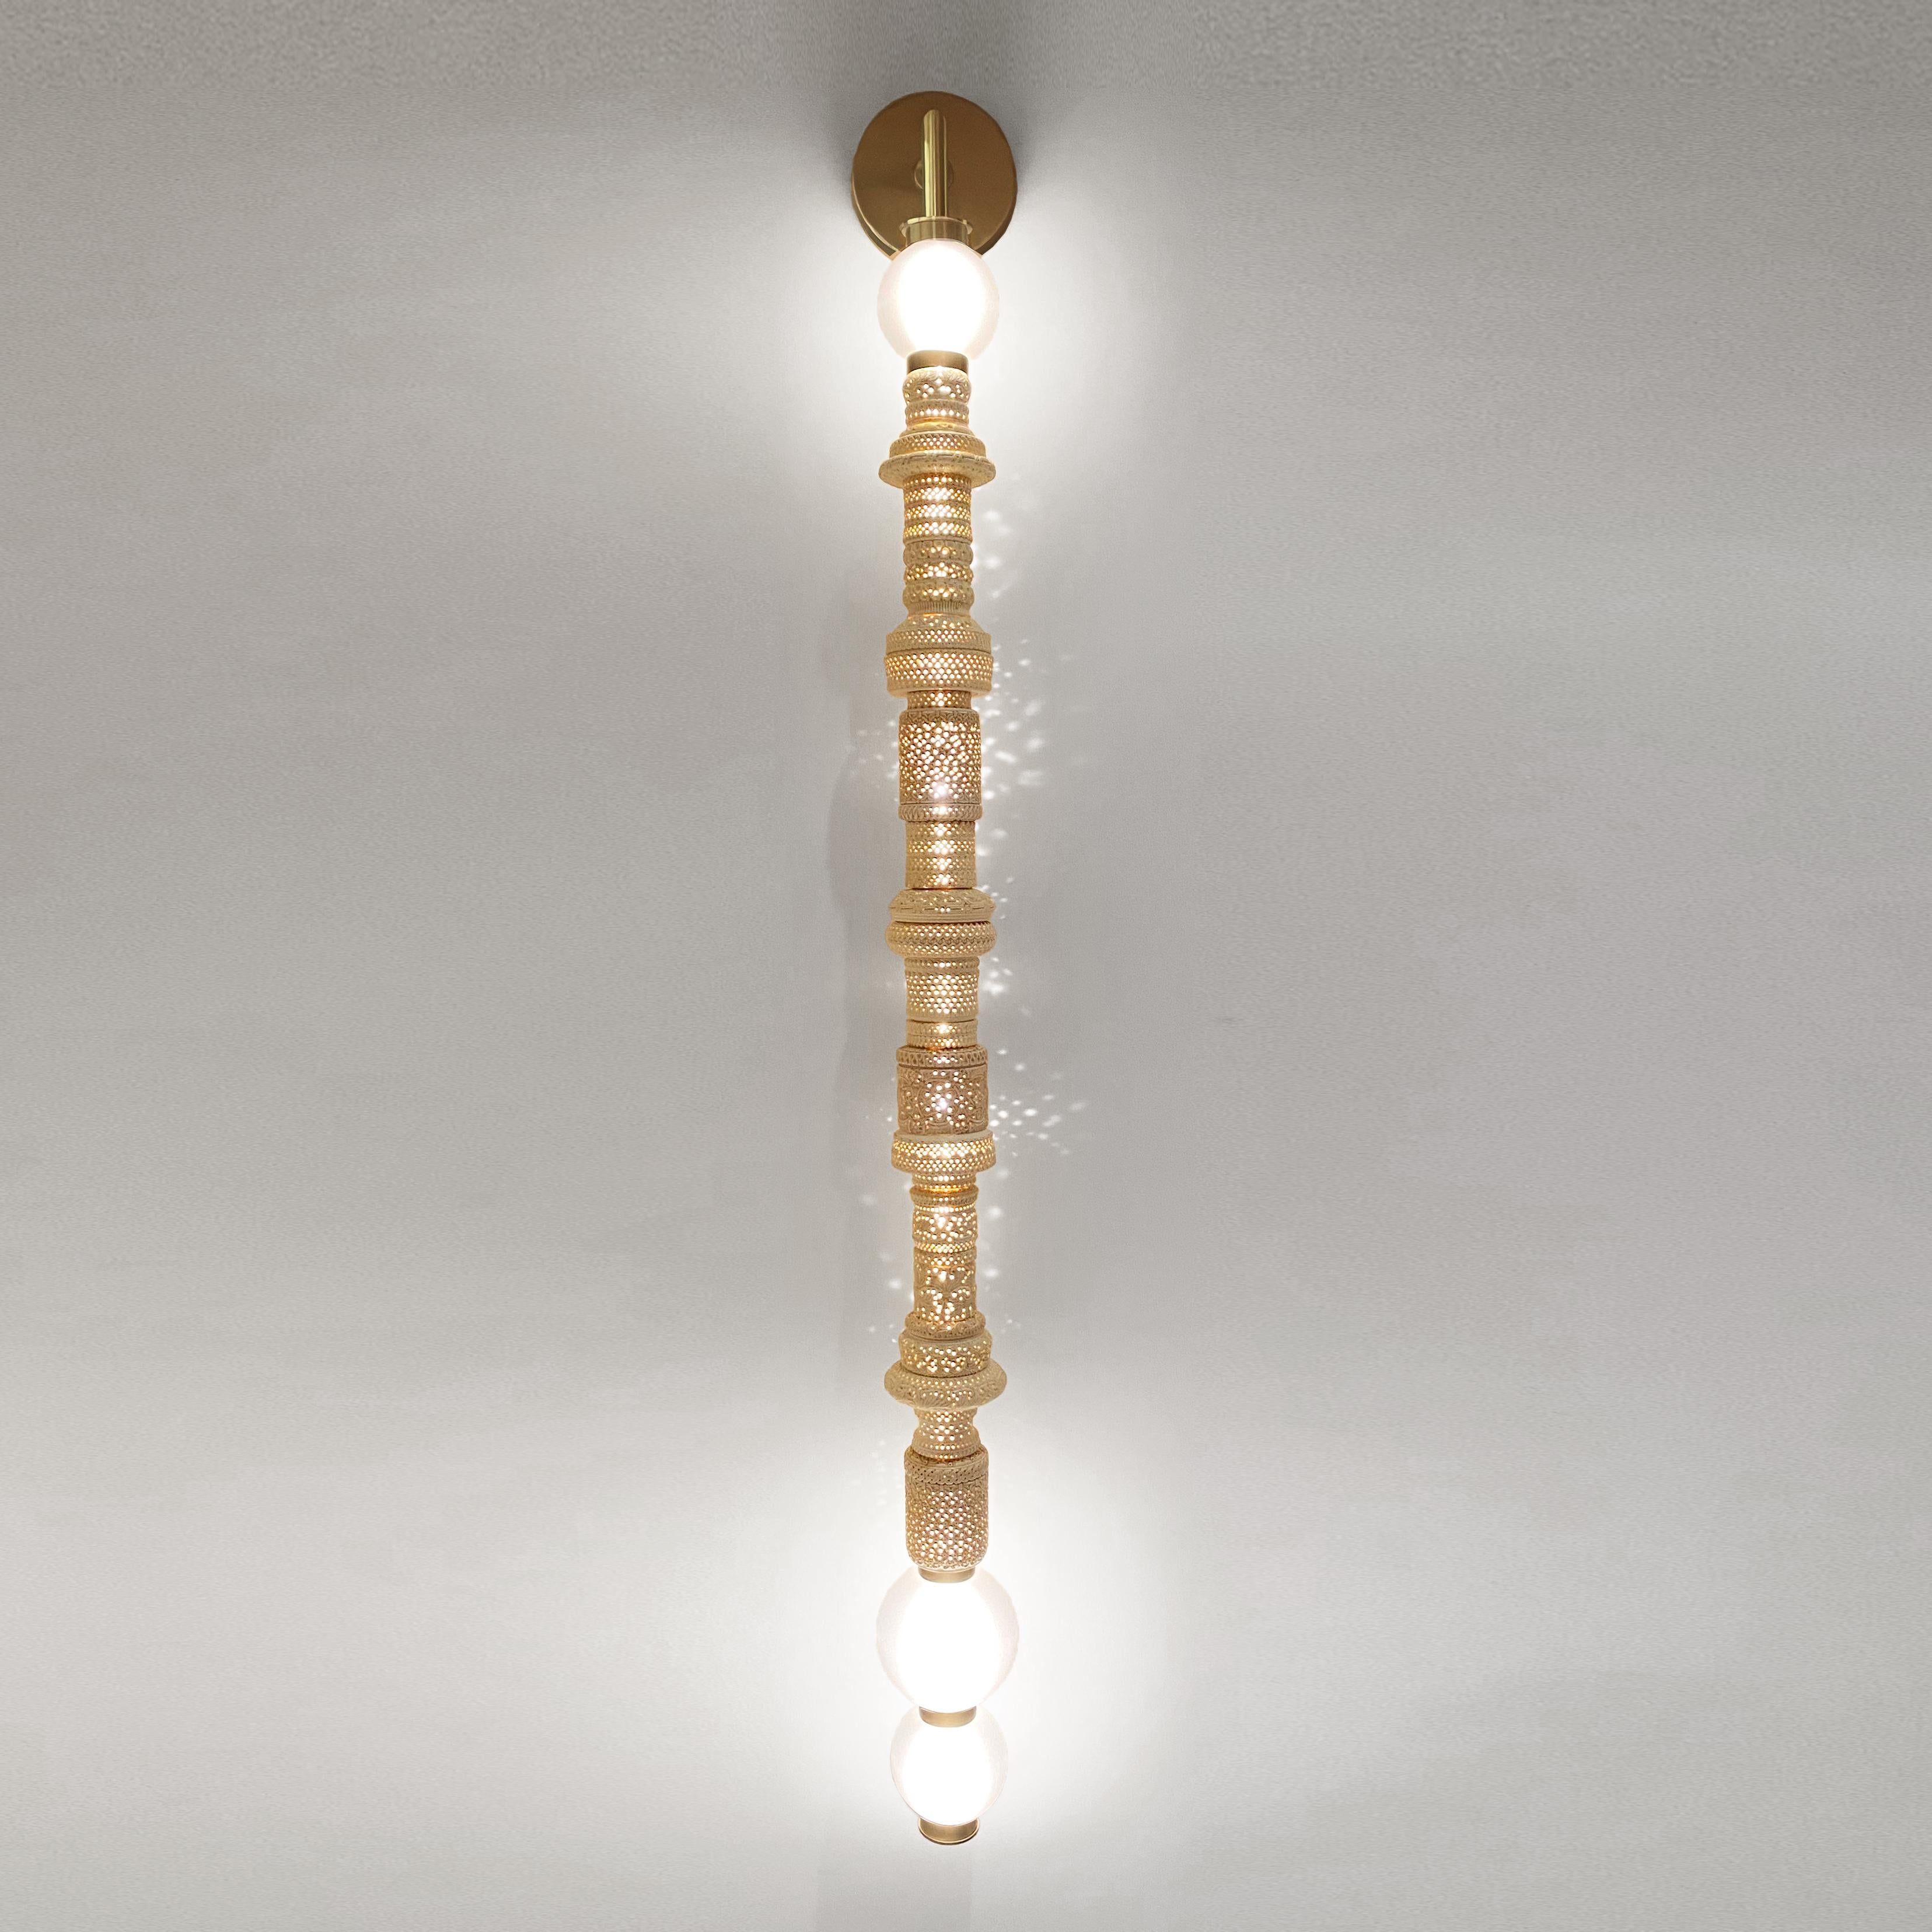 Feyza Kemahlioglu
Pillars of Meerschaum Sconce, 2022
Meerschaum, blown glass, brass, LED
Measures: 60 x 6 x 6 in.